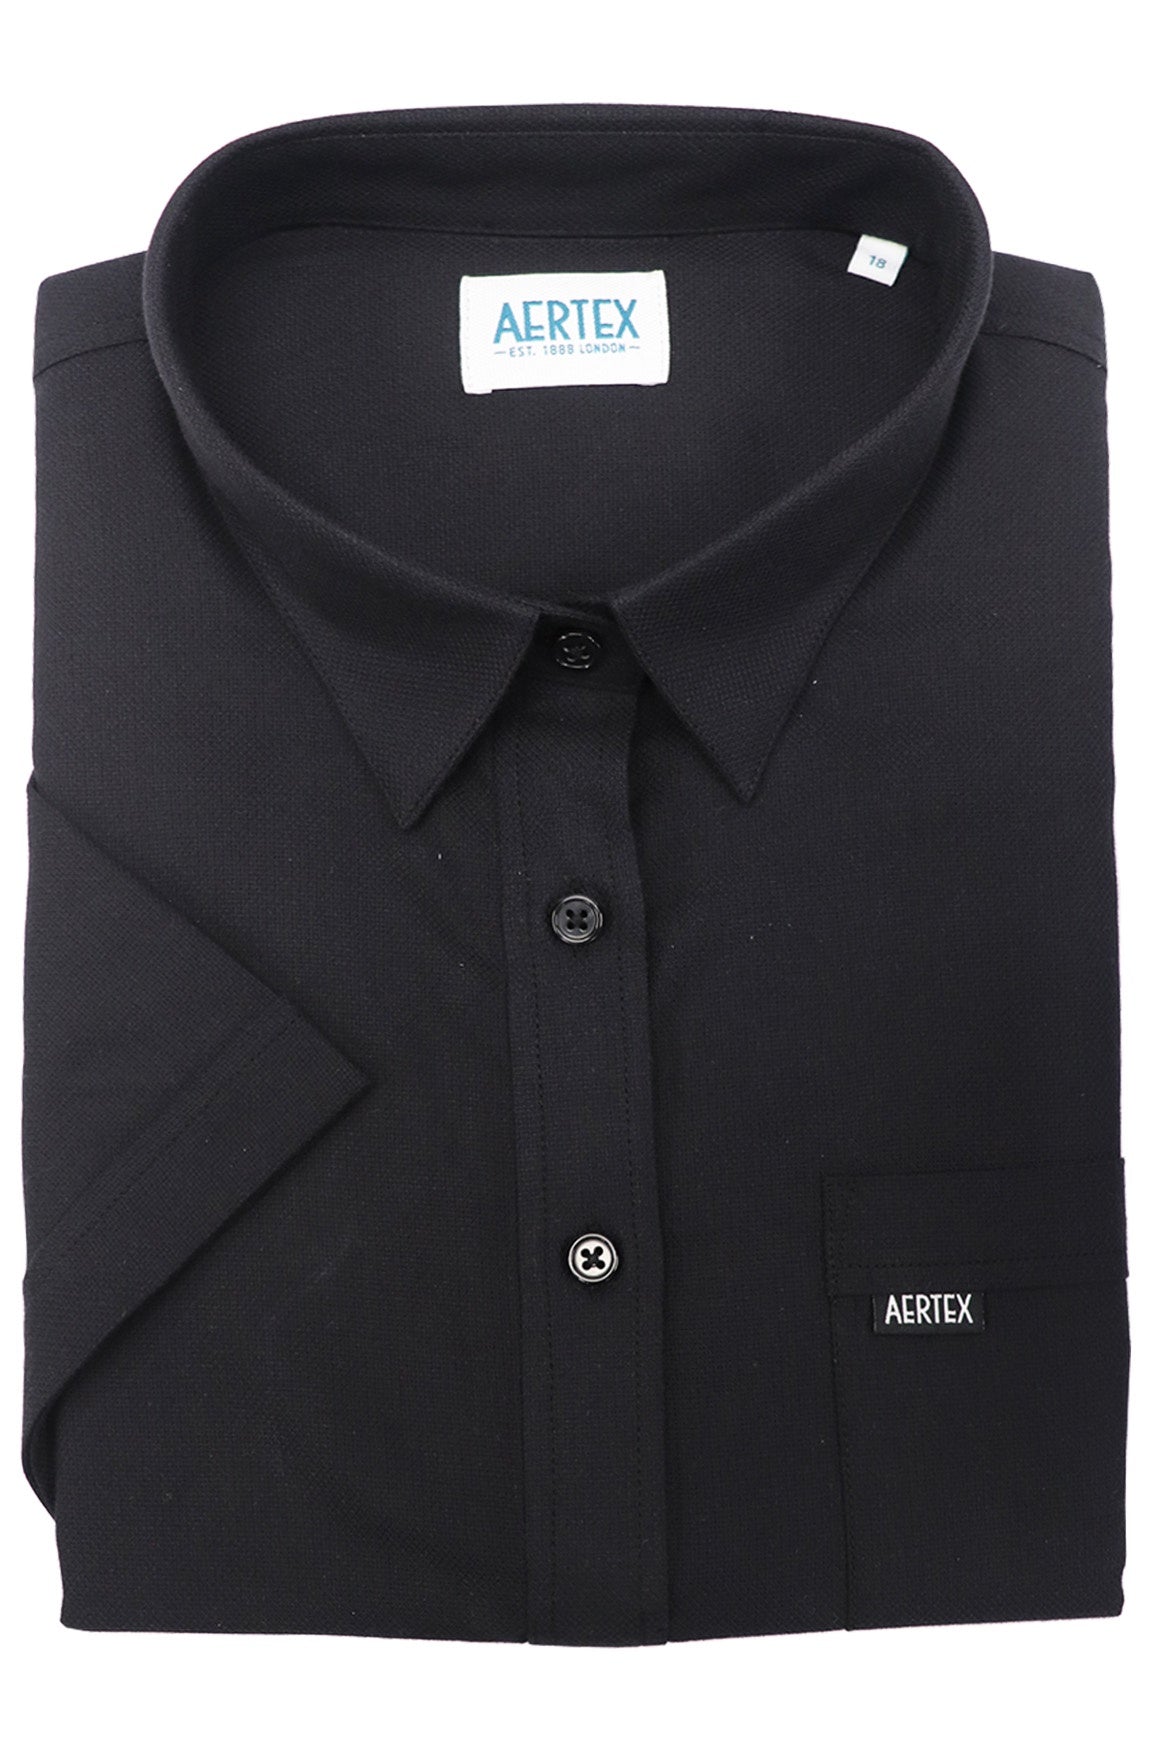 Aertex FYI175 Wells Ladies Polo - Thomson's Suits Ltd - Black - 8 - 44136